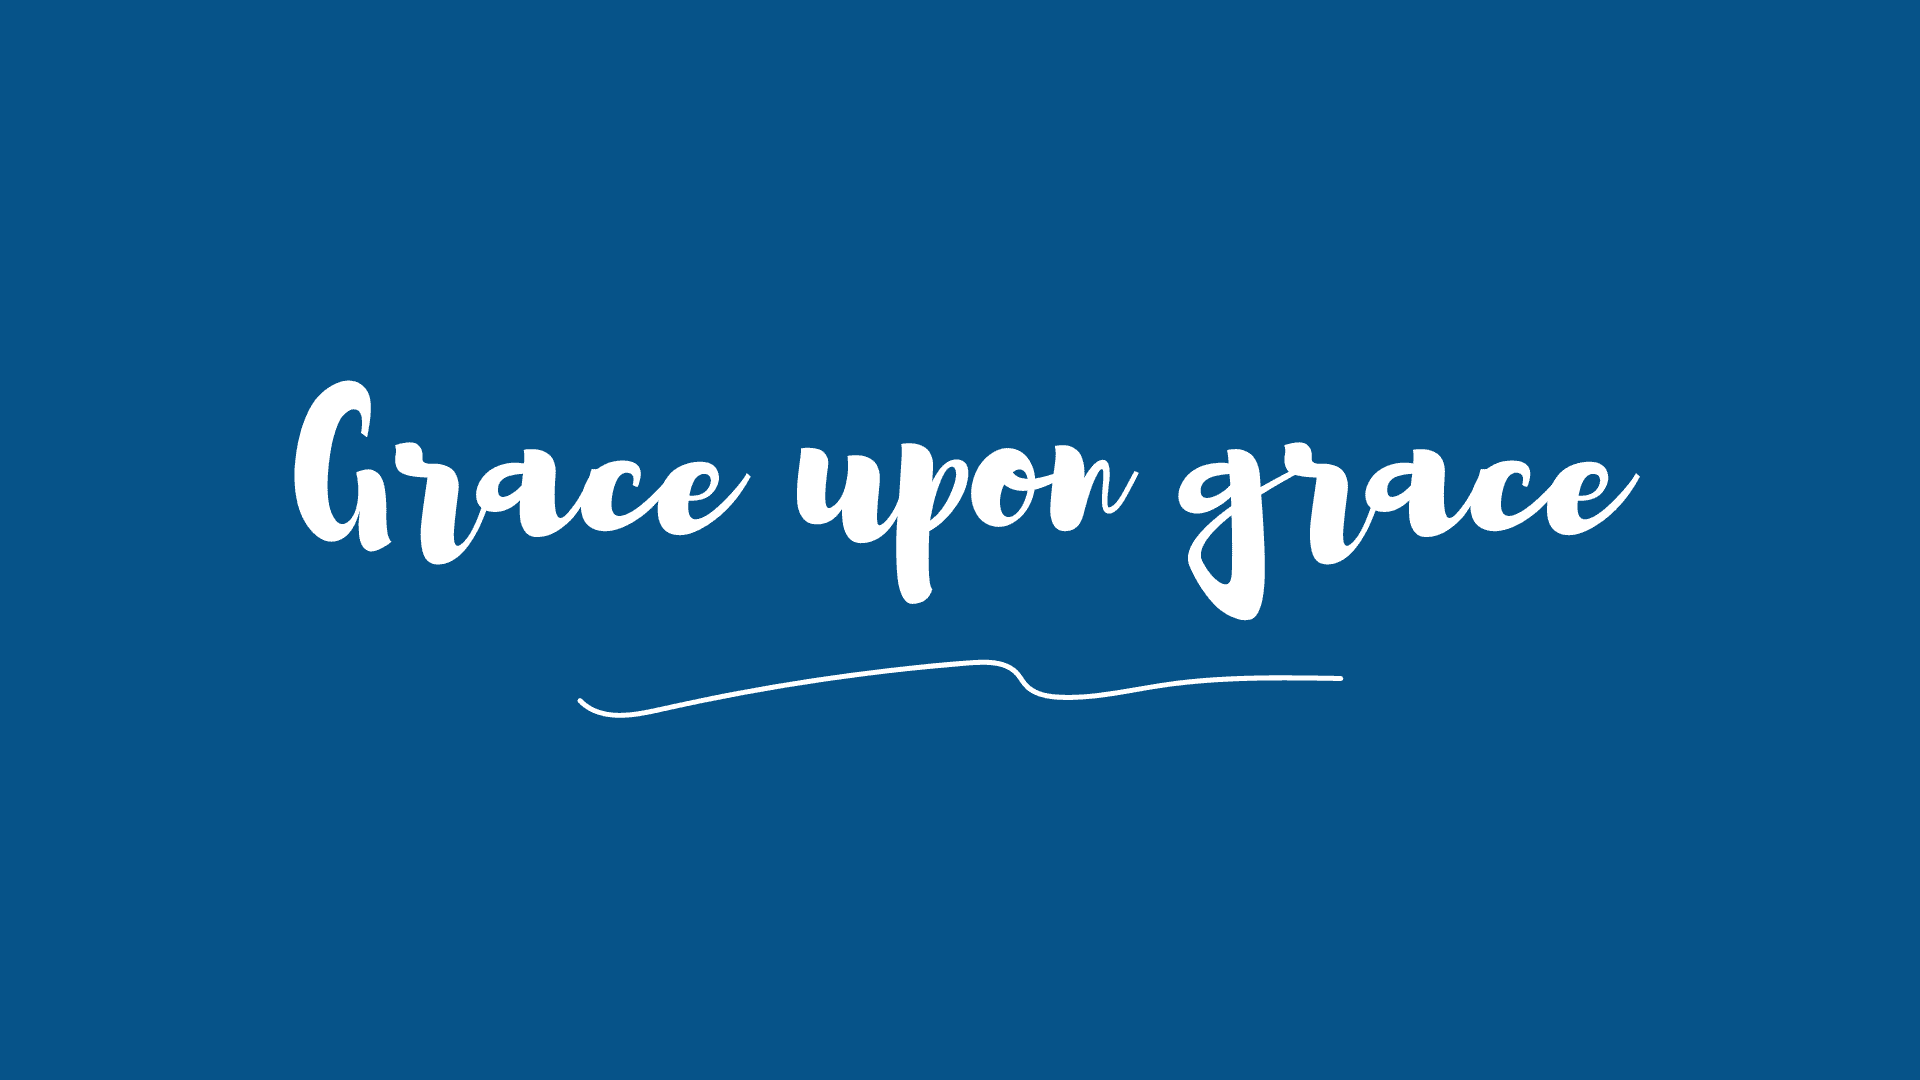 Grace upon grace! - Abiding Fathers